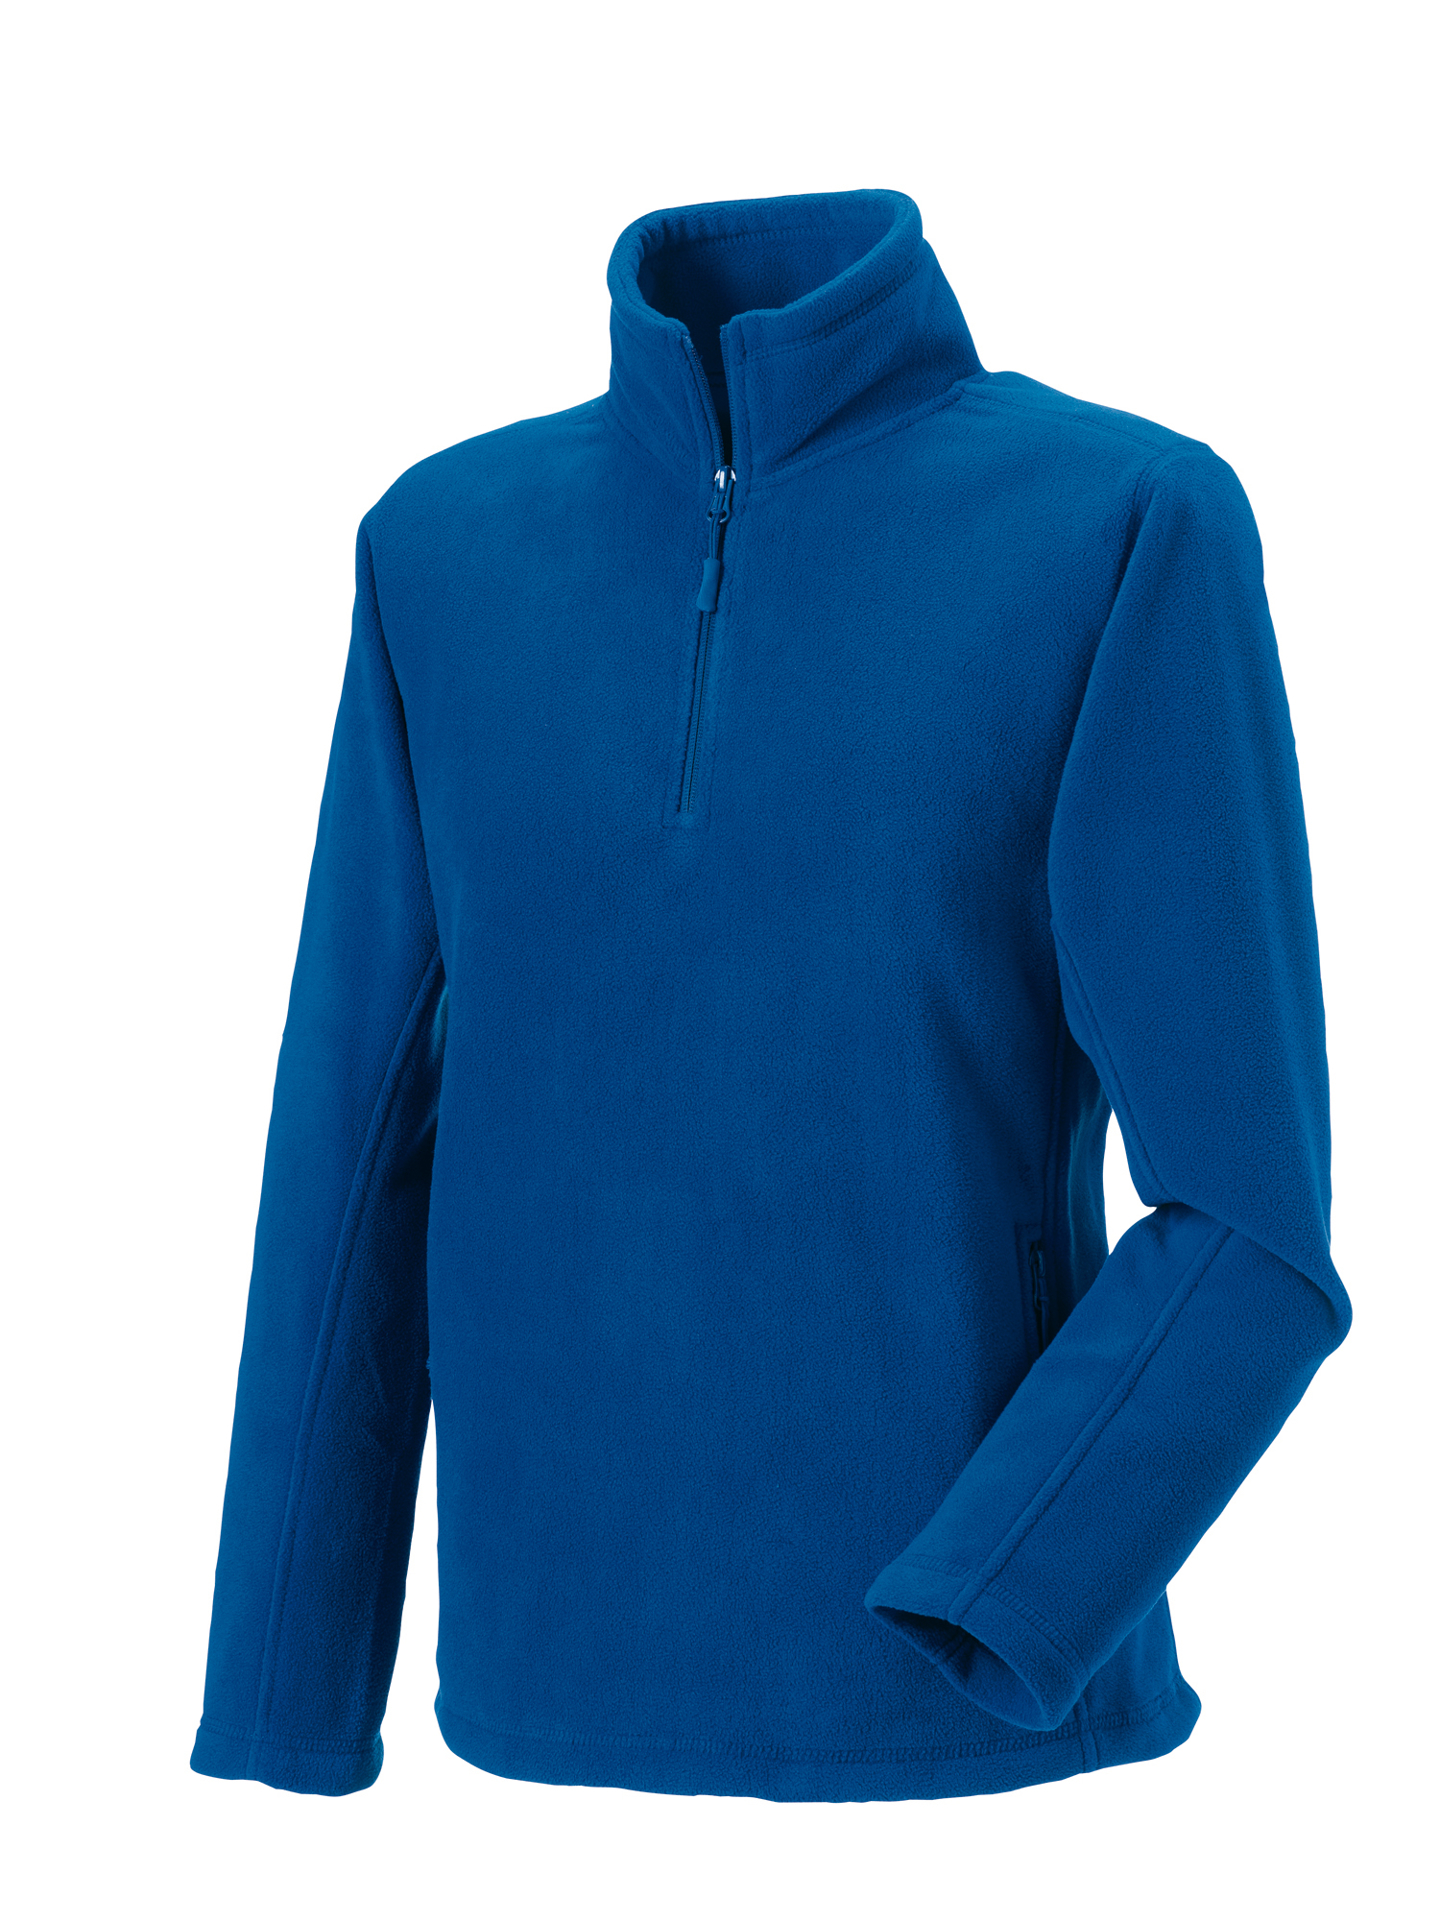 1/4 zip outdoor fleece in blue with cadet collar and pockets